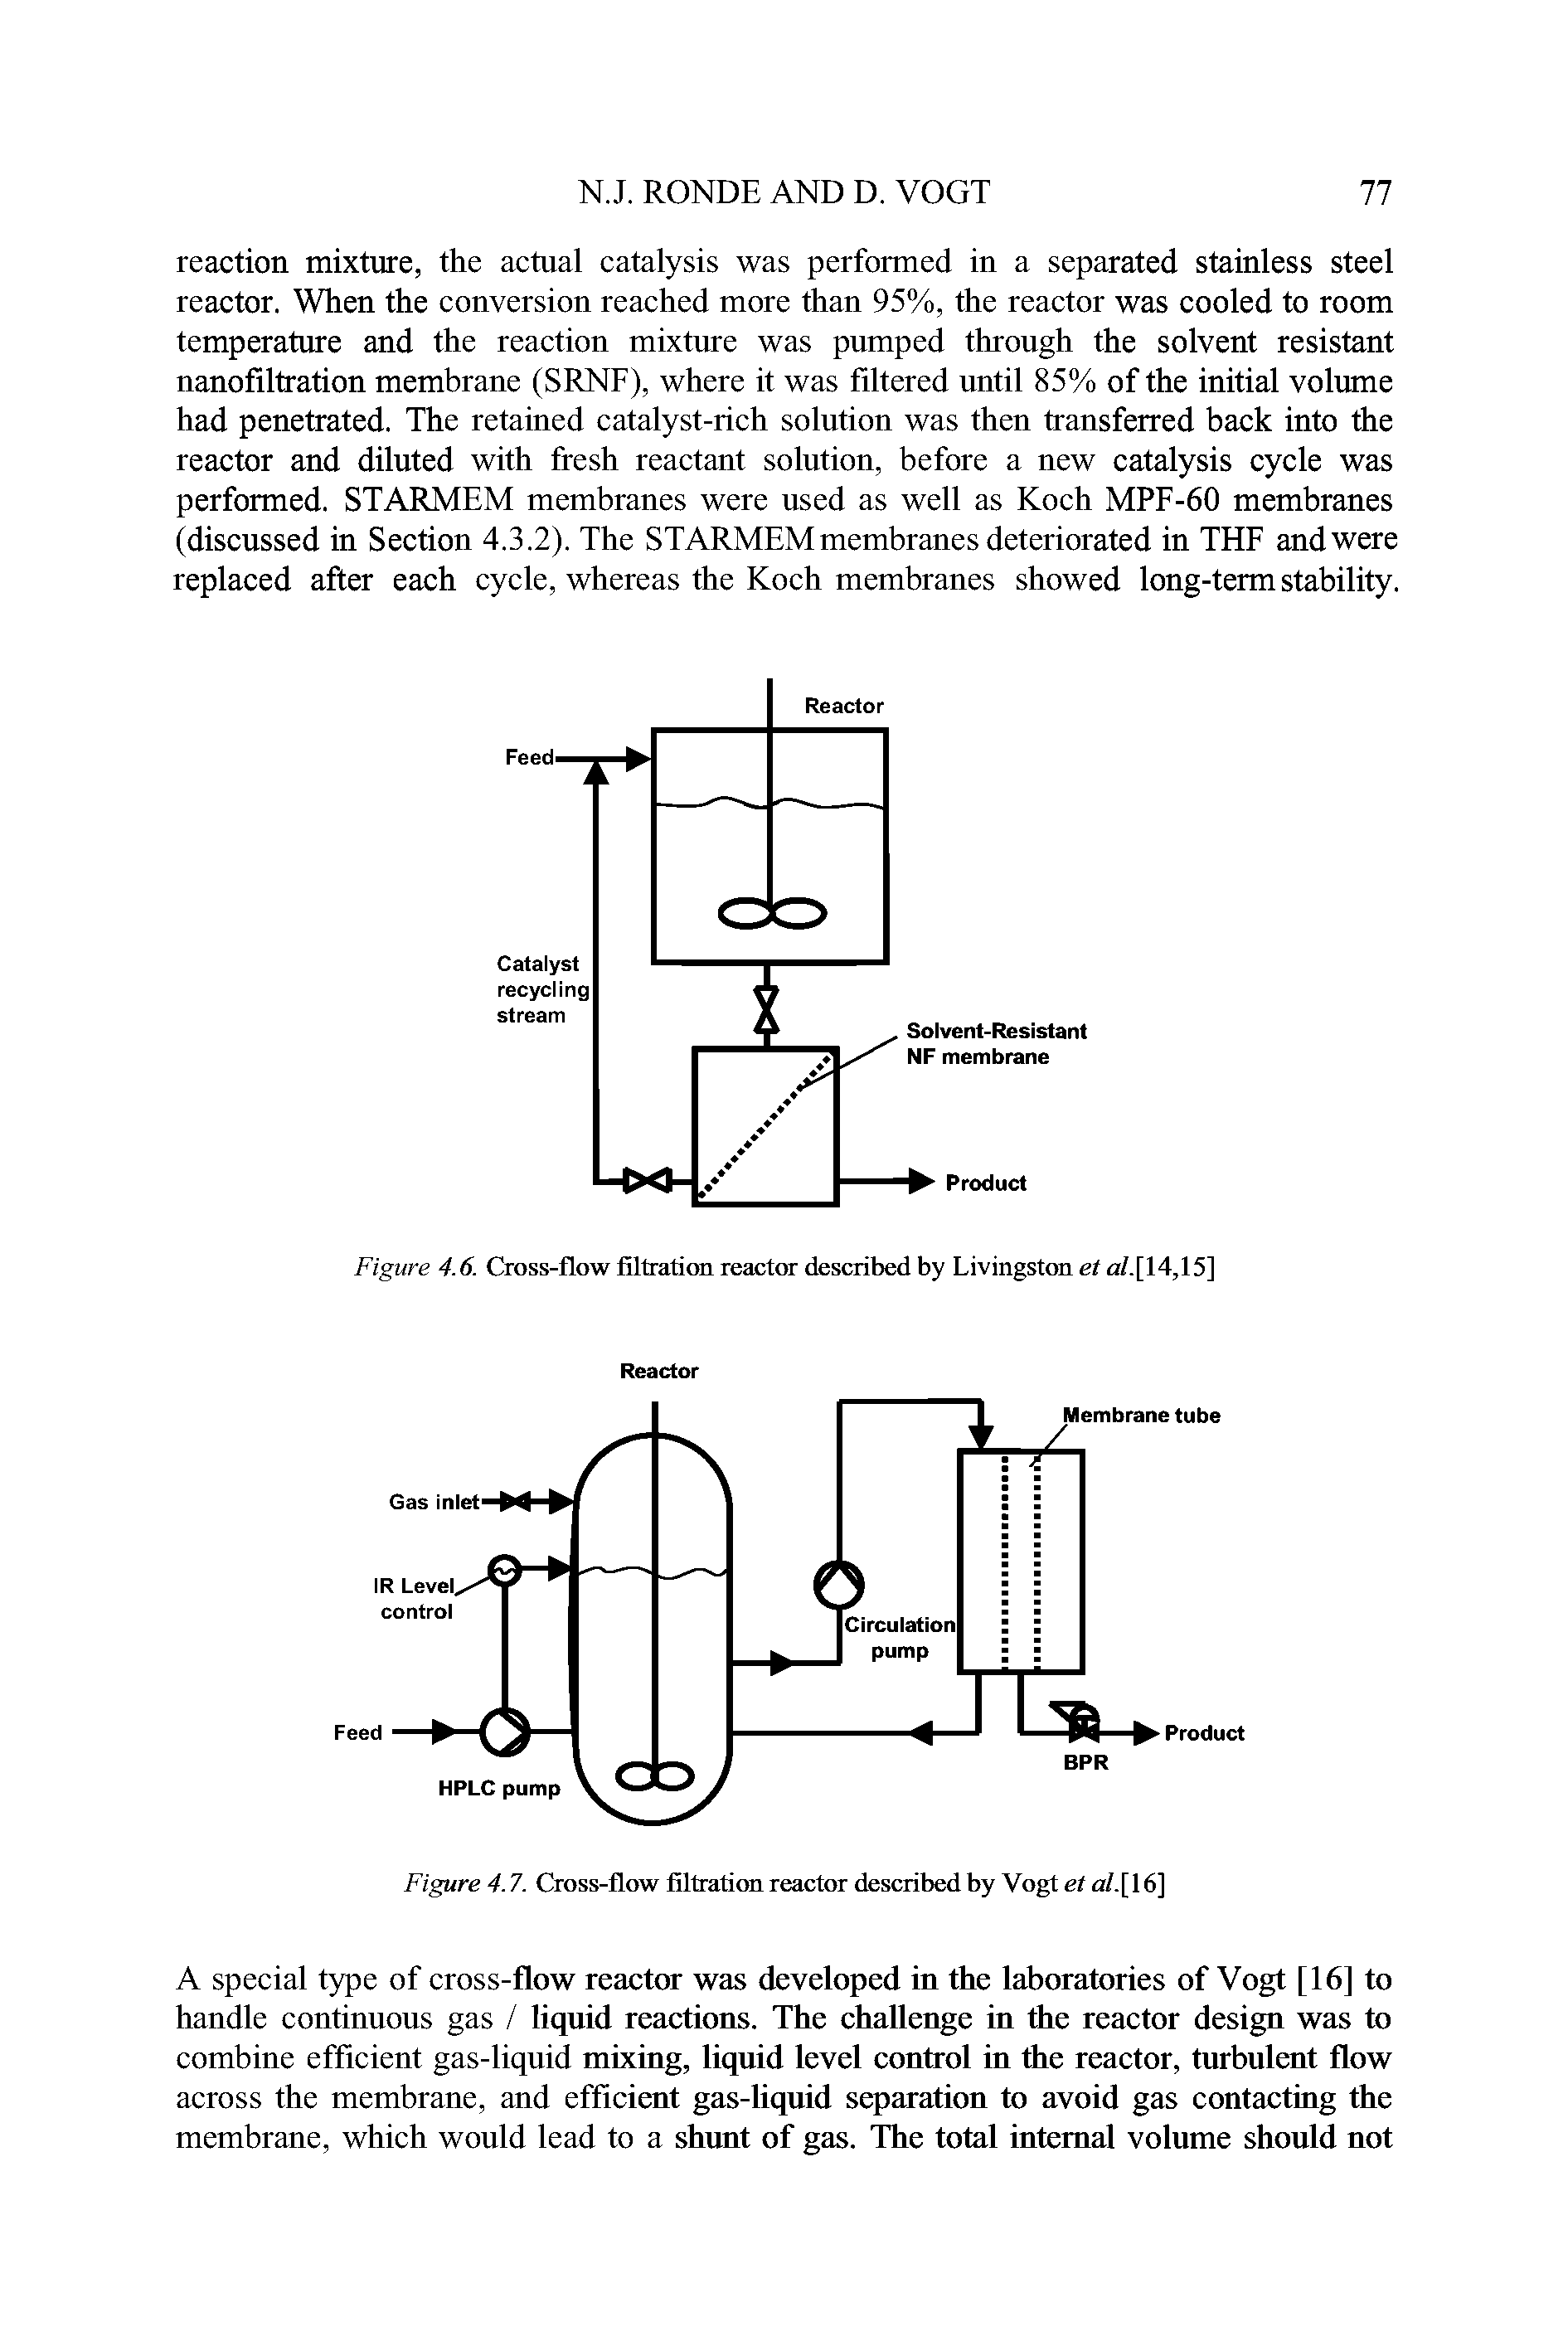 Figure 4.6. Cross-flow filtration reactor described by Livingston et a/.[14,15]...